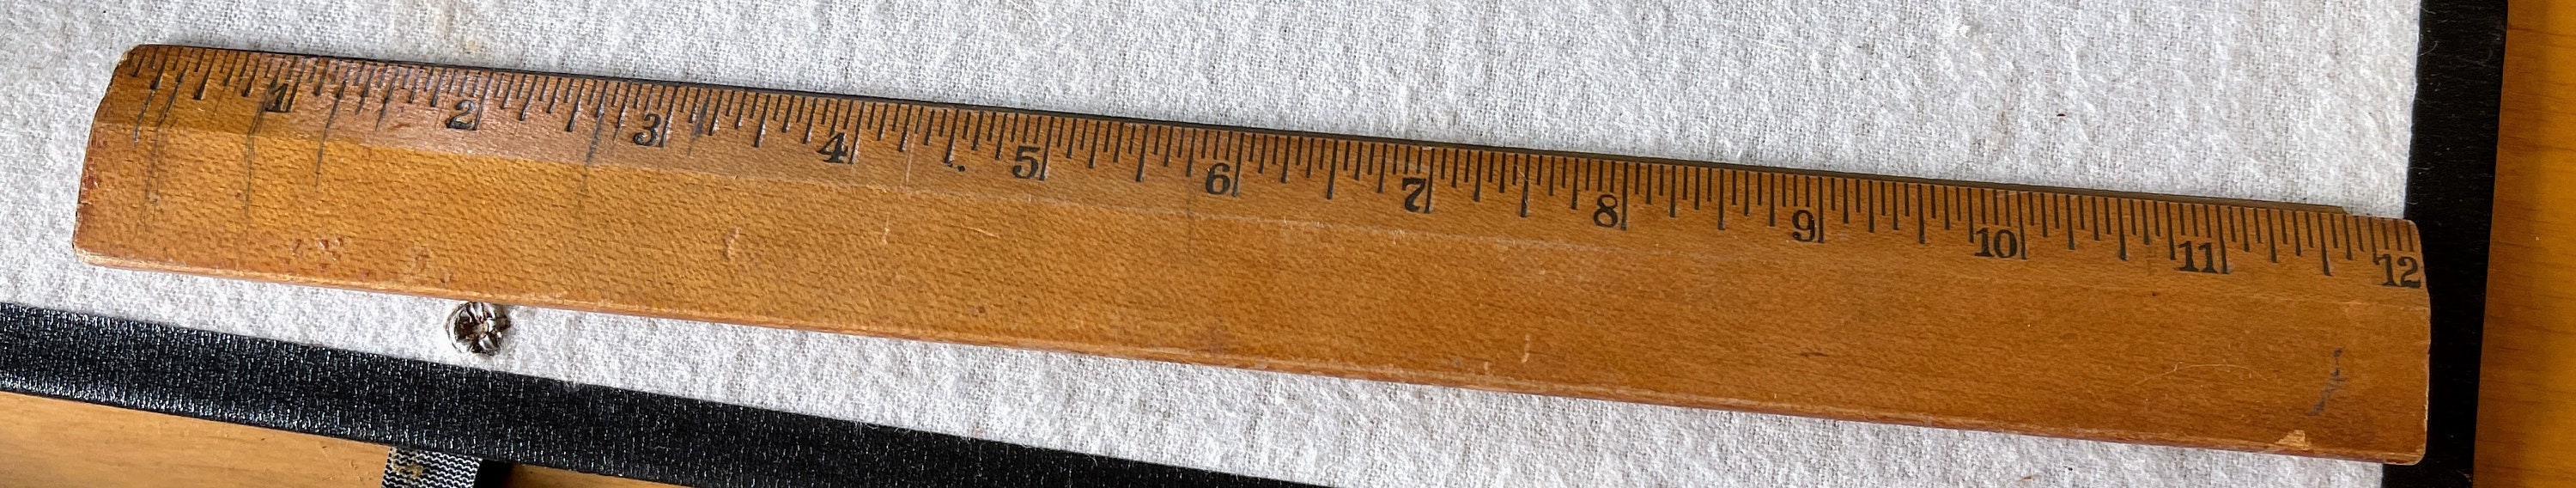 CM1263 Standard 12 inch Ruler